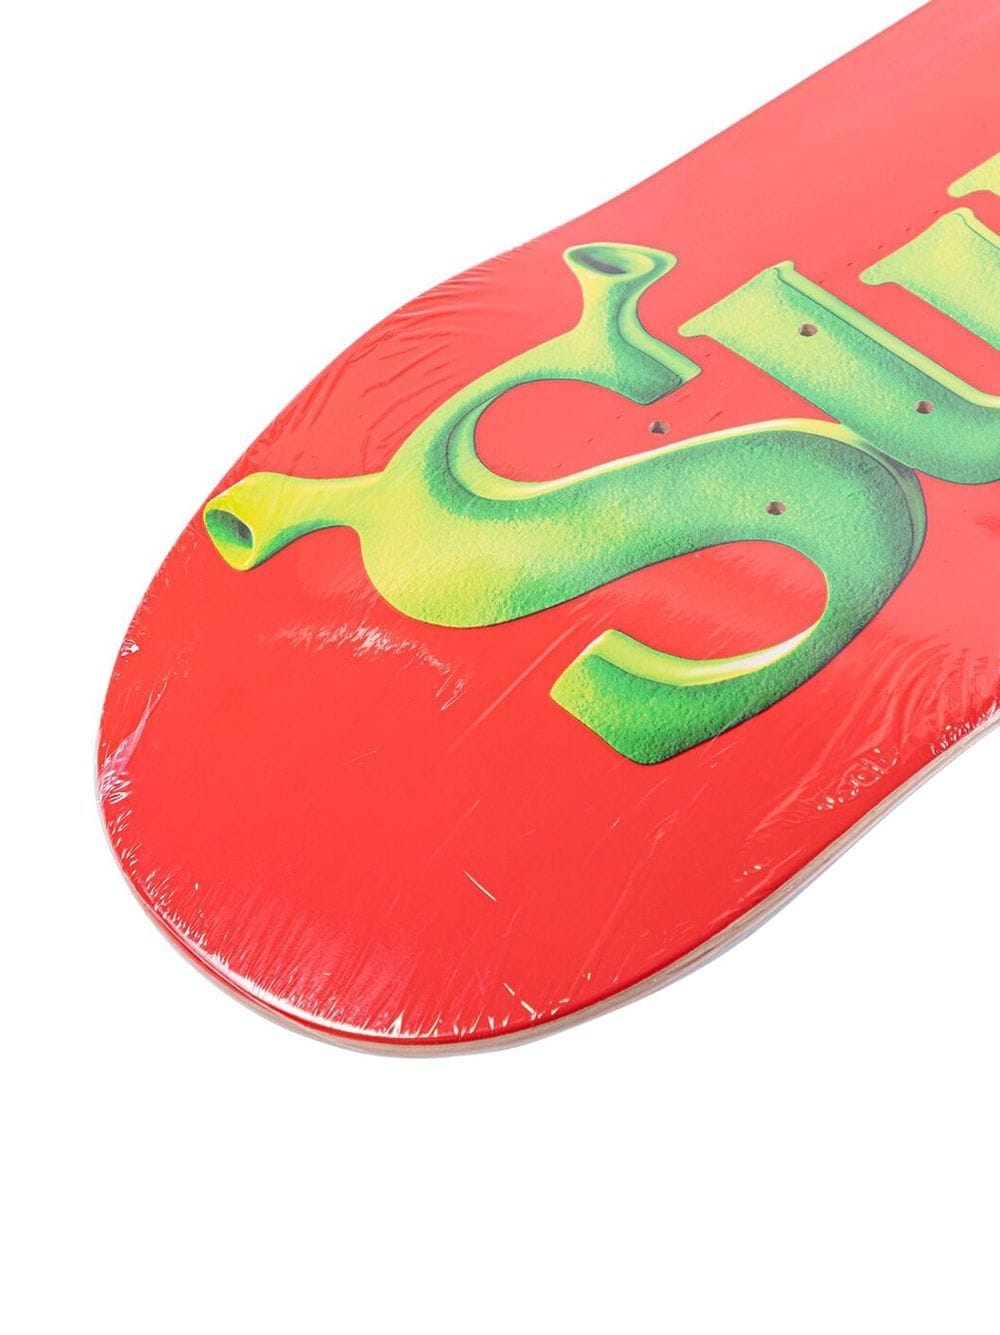 Shrek skateboard deck